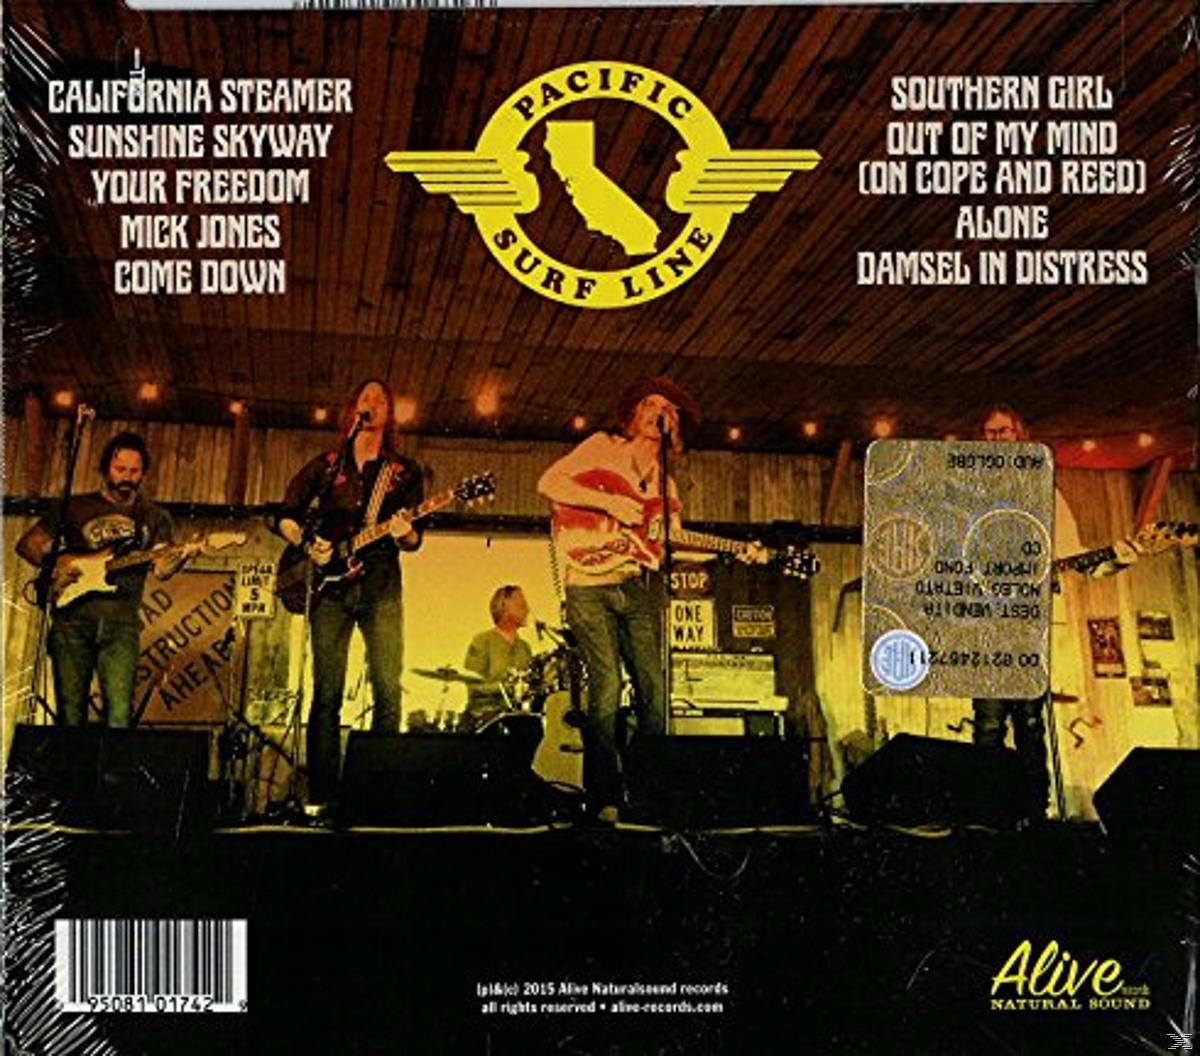 Gospelbeach Line Surf (CD) - - Pacific